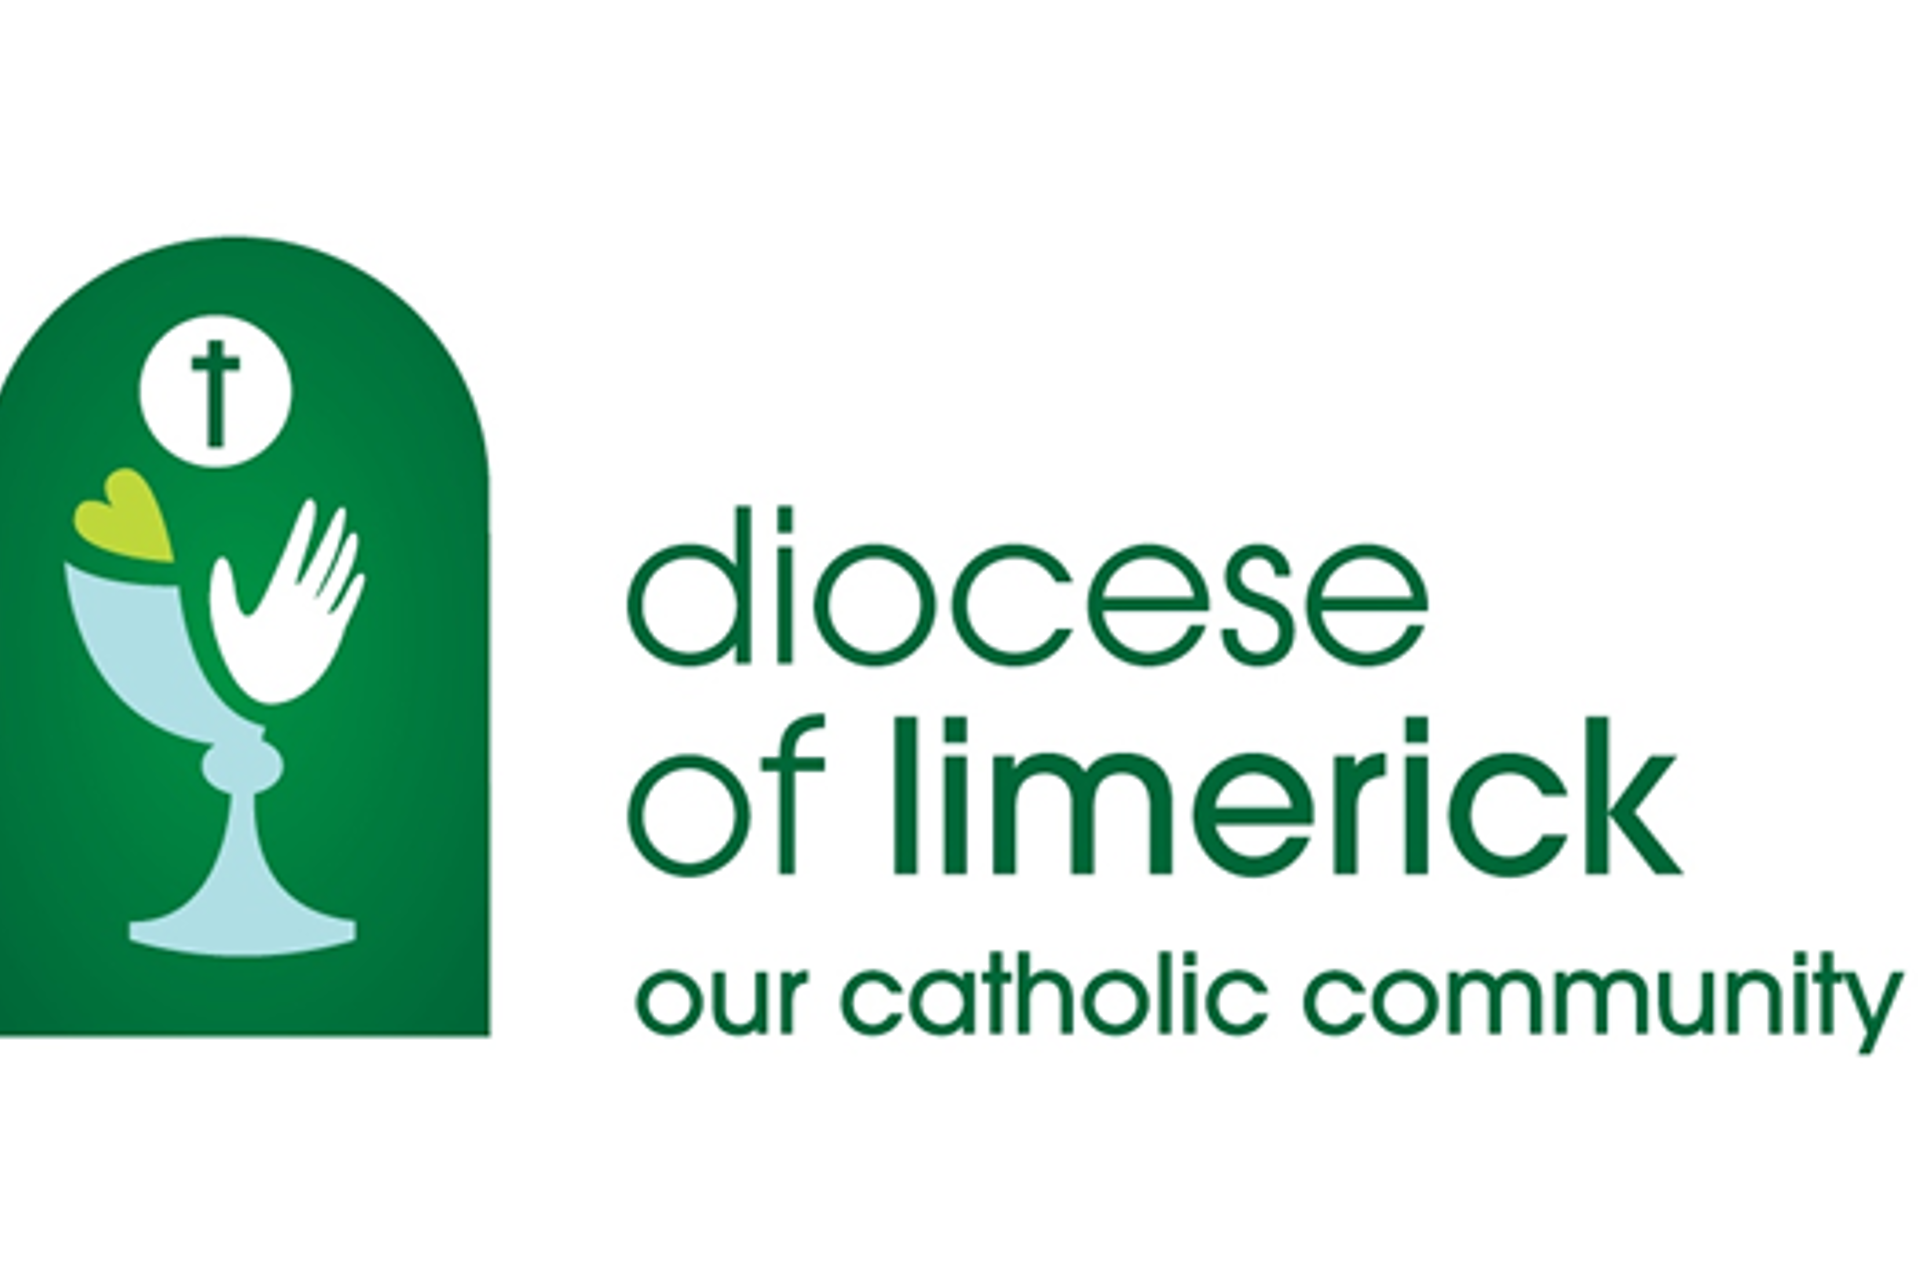 Statement of Munster Bishops – Encouragement and Support